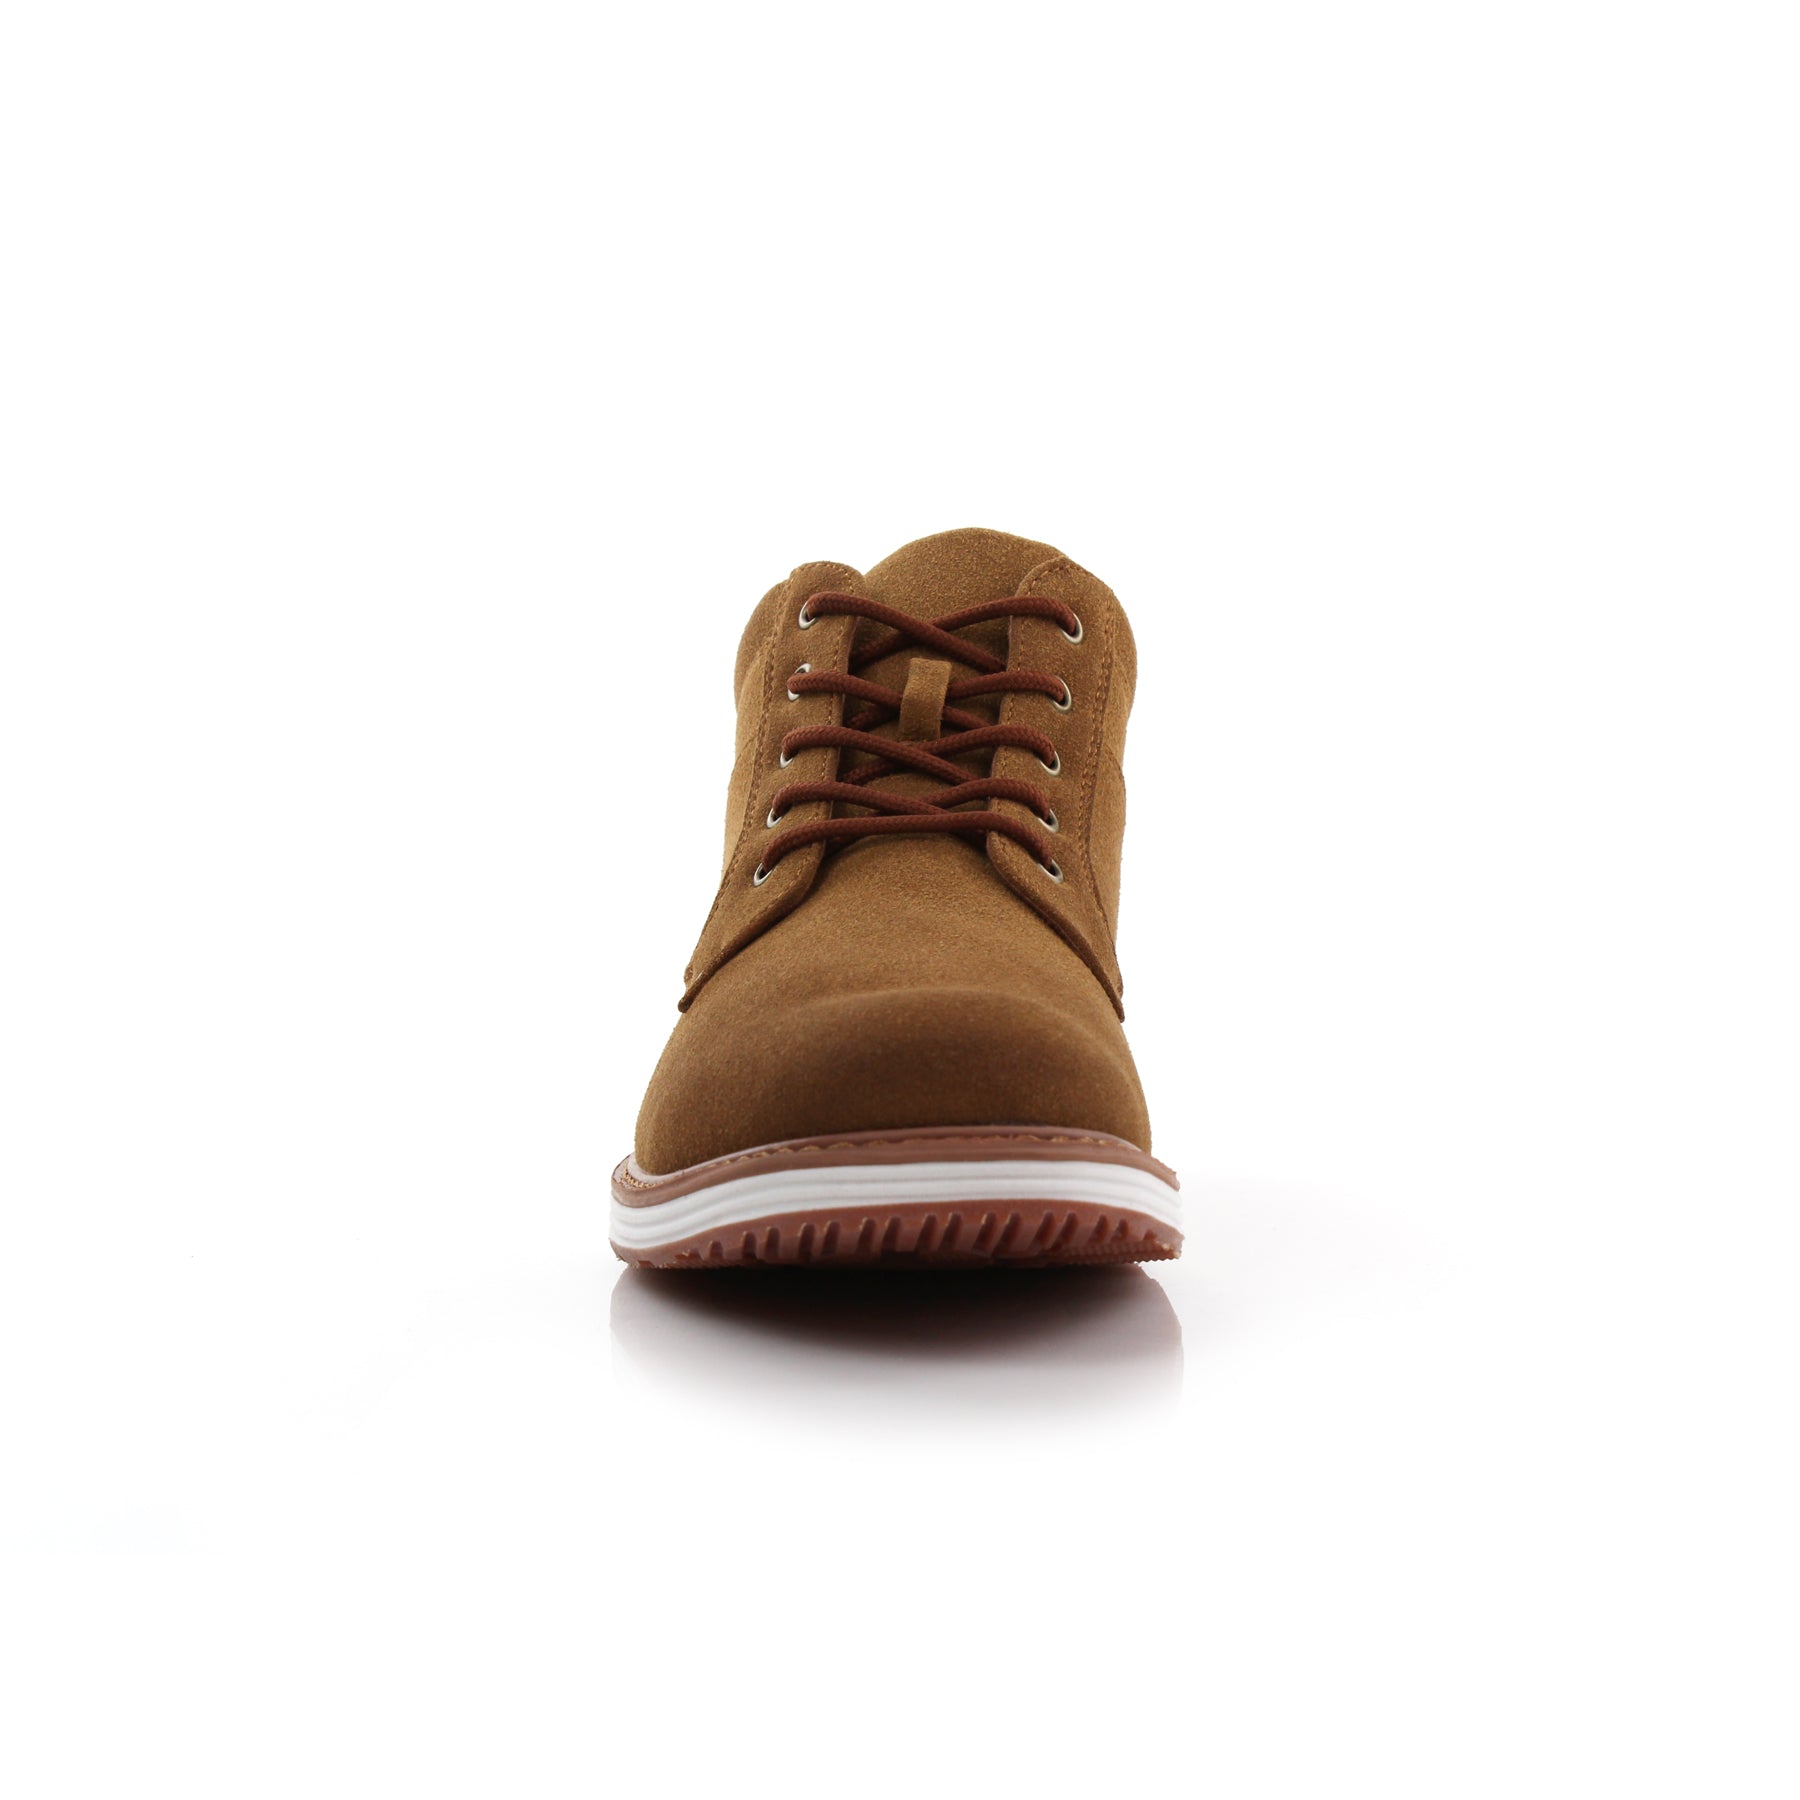 Suede Sneakers | Jax by Ferro Aldo | Conal Footwear | Front Angle View